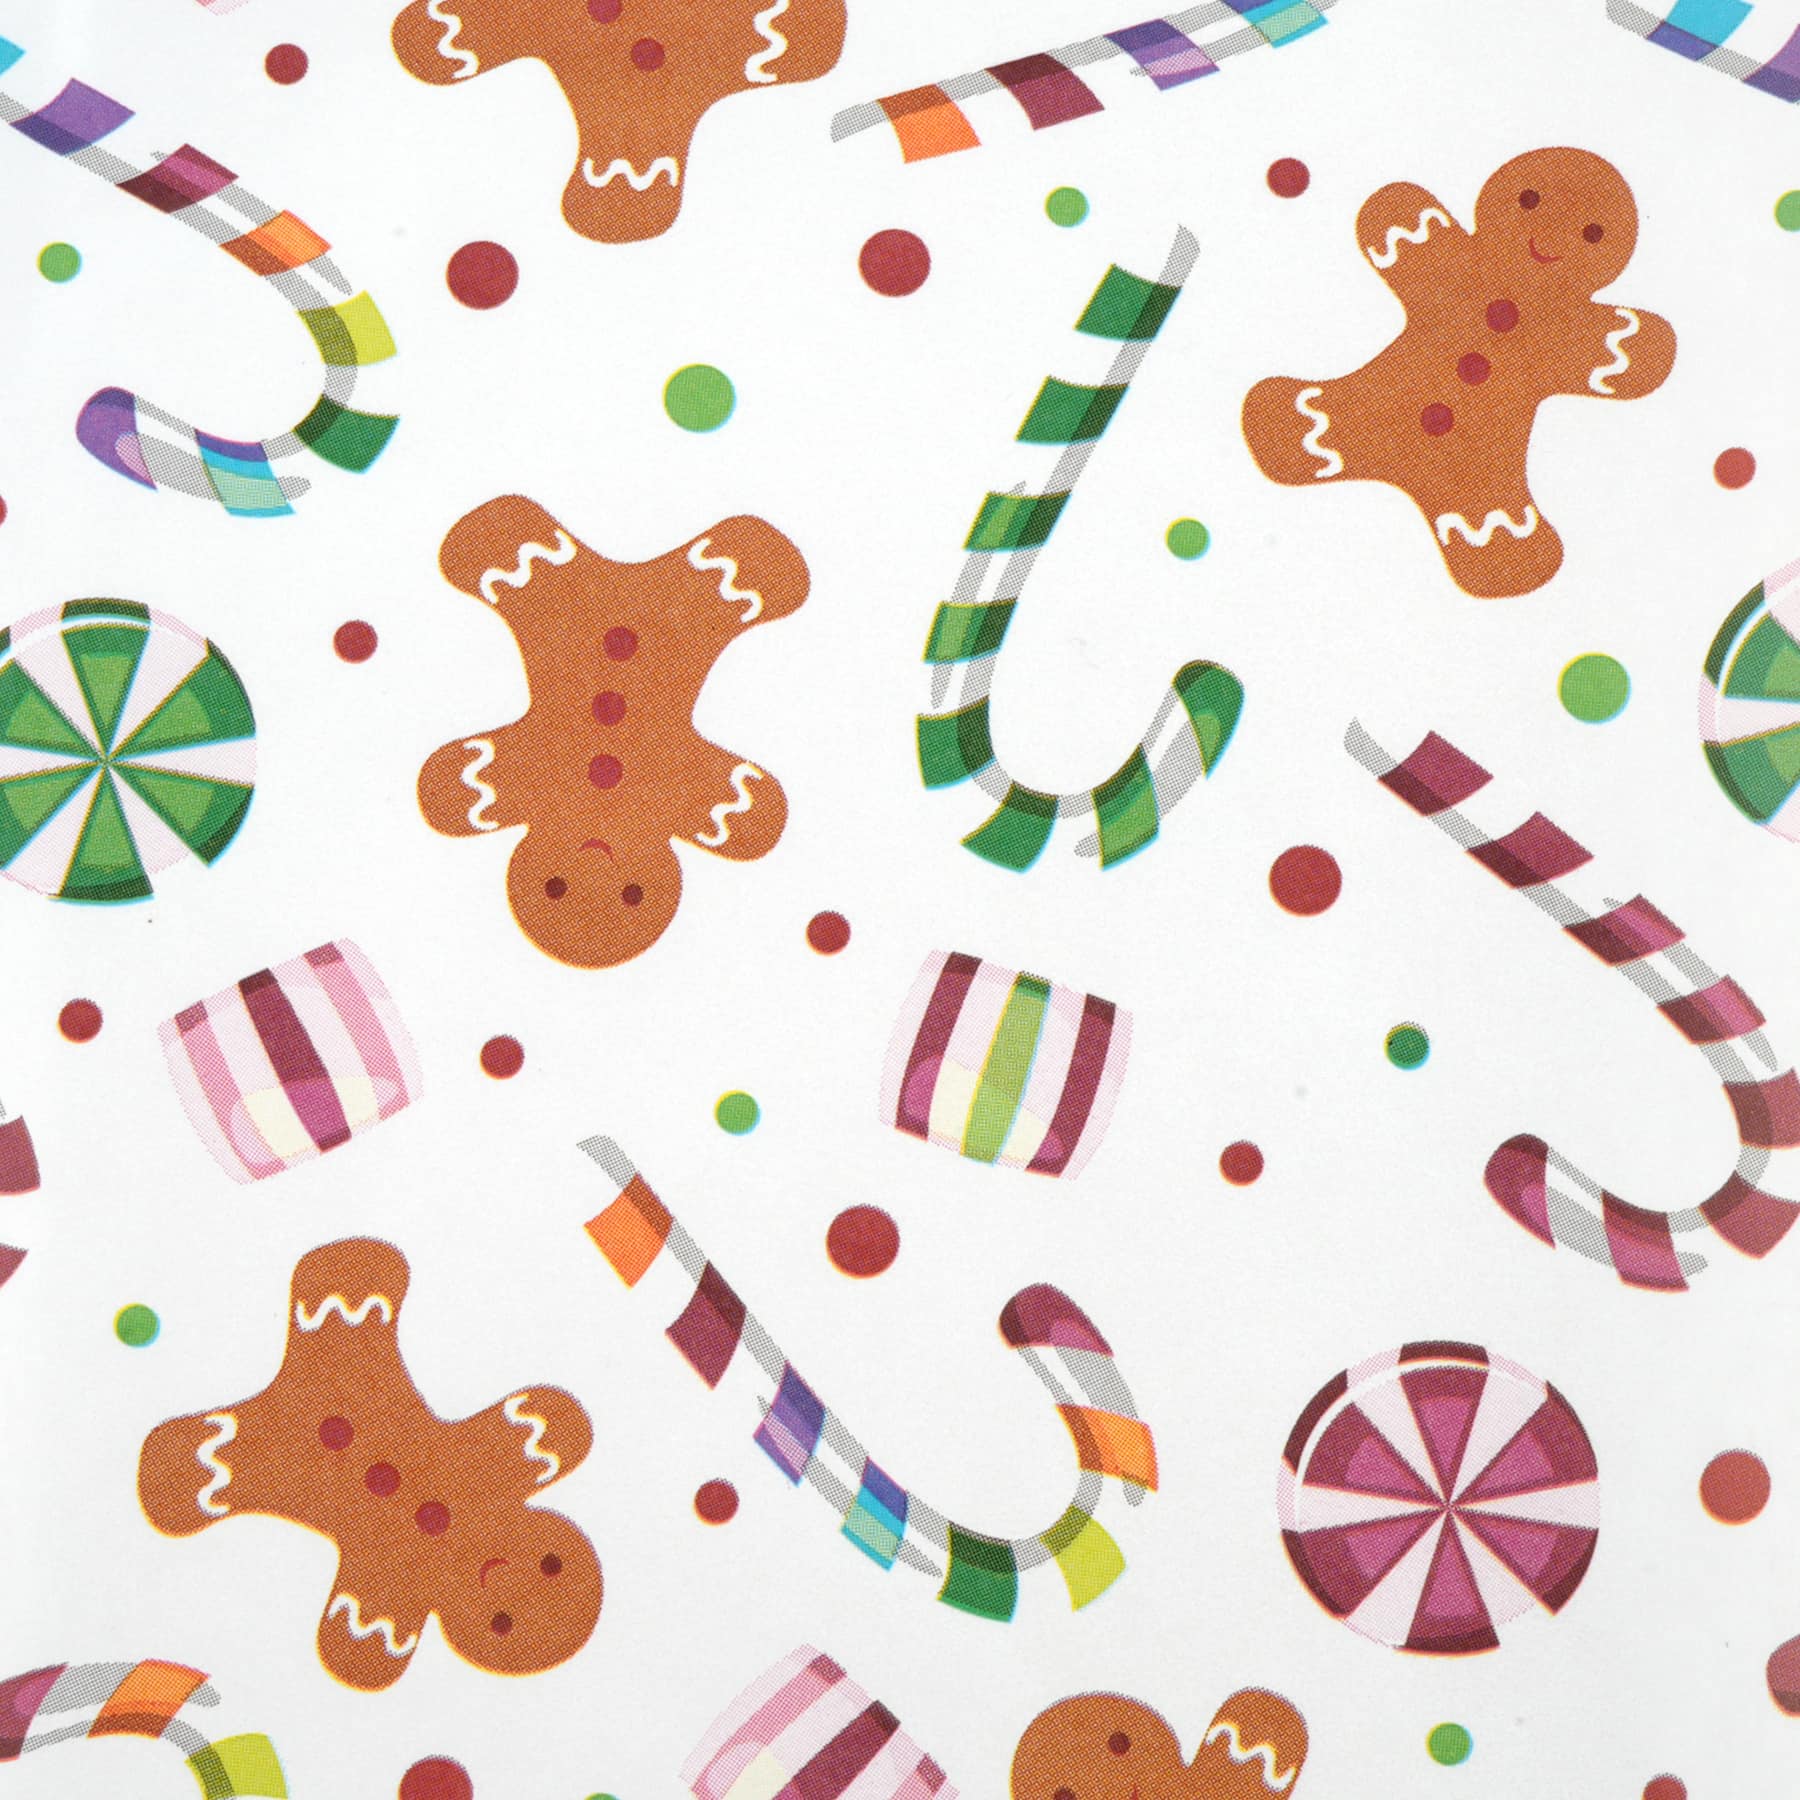 12 x 16 Gingerbread Man Pre-Cut Parchment Paper by Celebrate It®, 25ct.